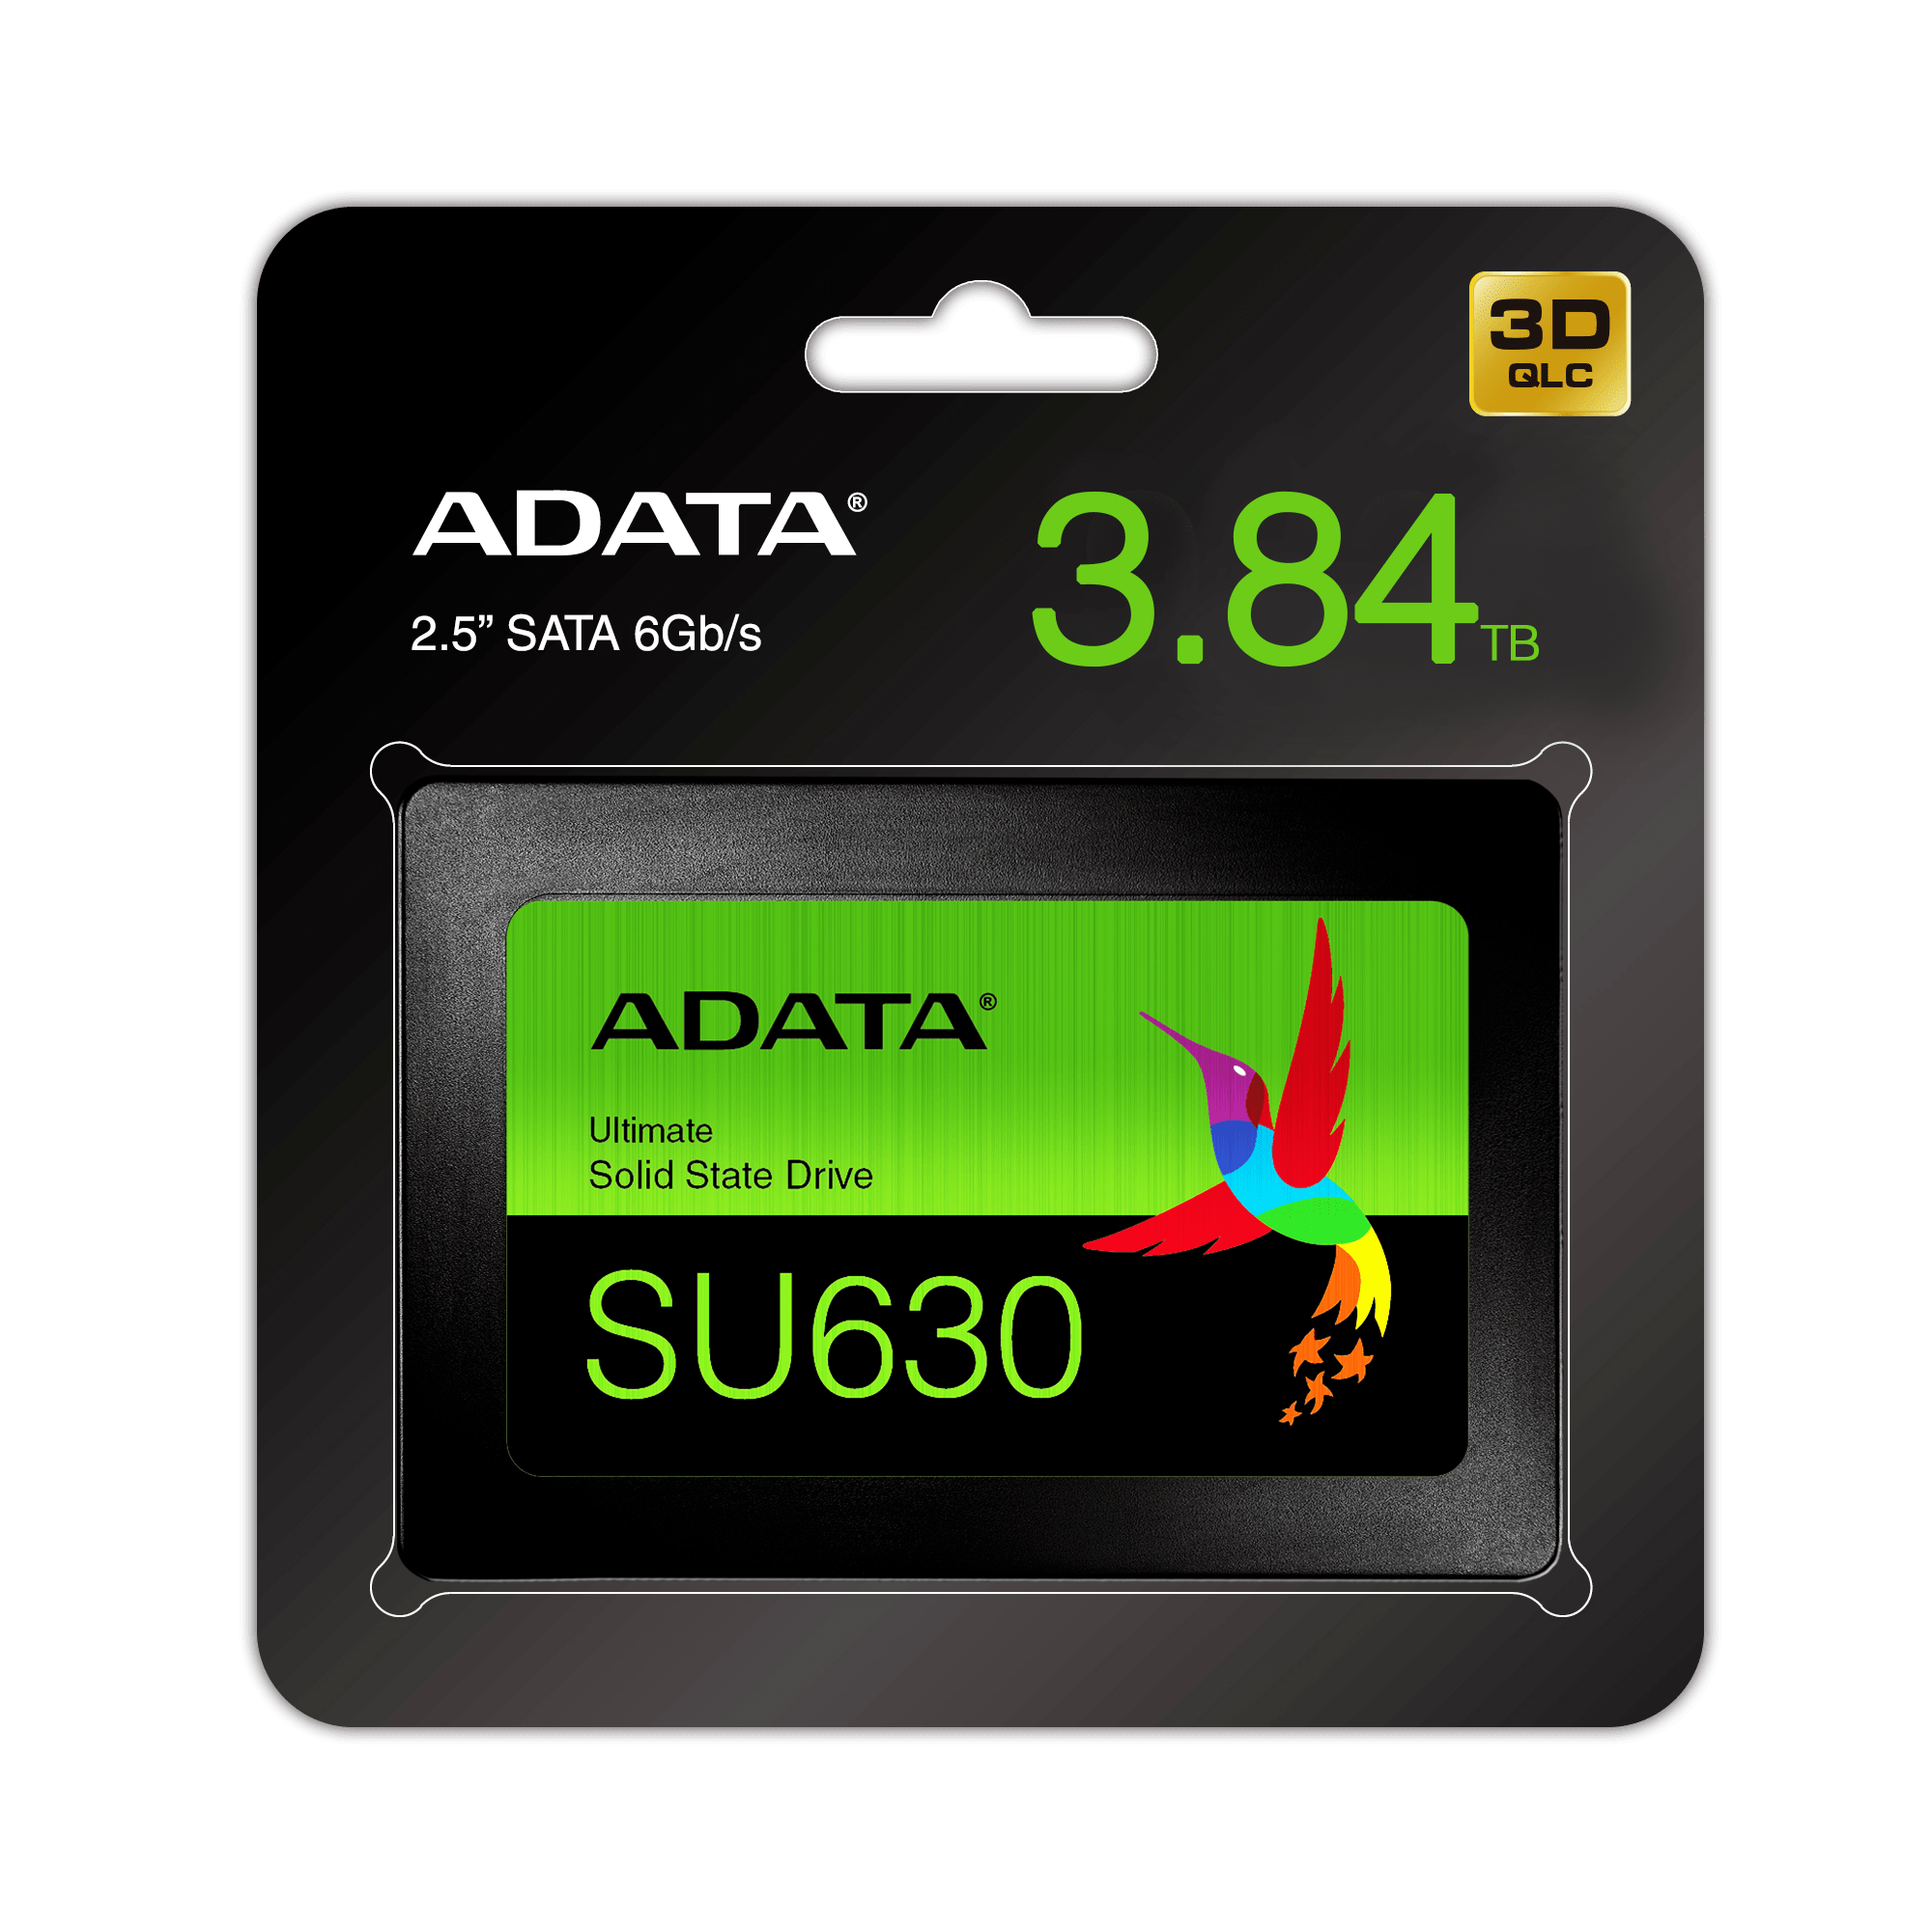 ADATA SU635 240GB 3D-NAND QLC SATA 2.5 Inch Internal SSD ASU635SS-240GQ-R